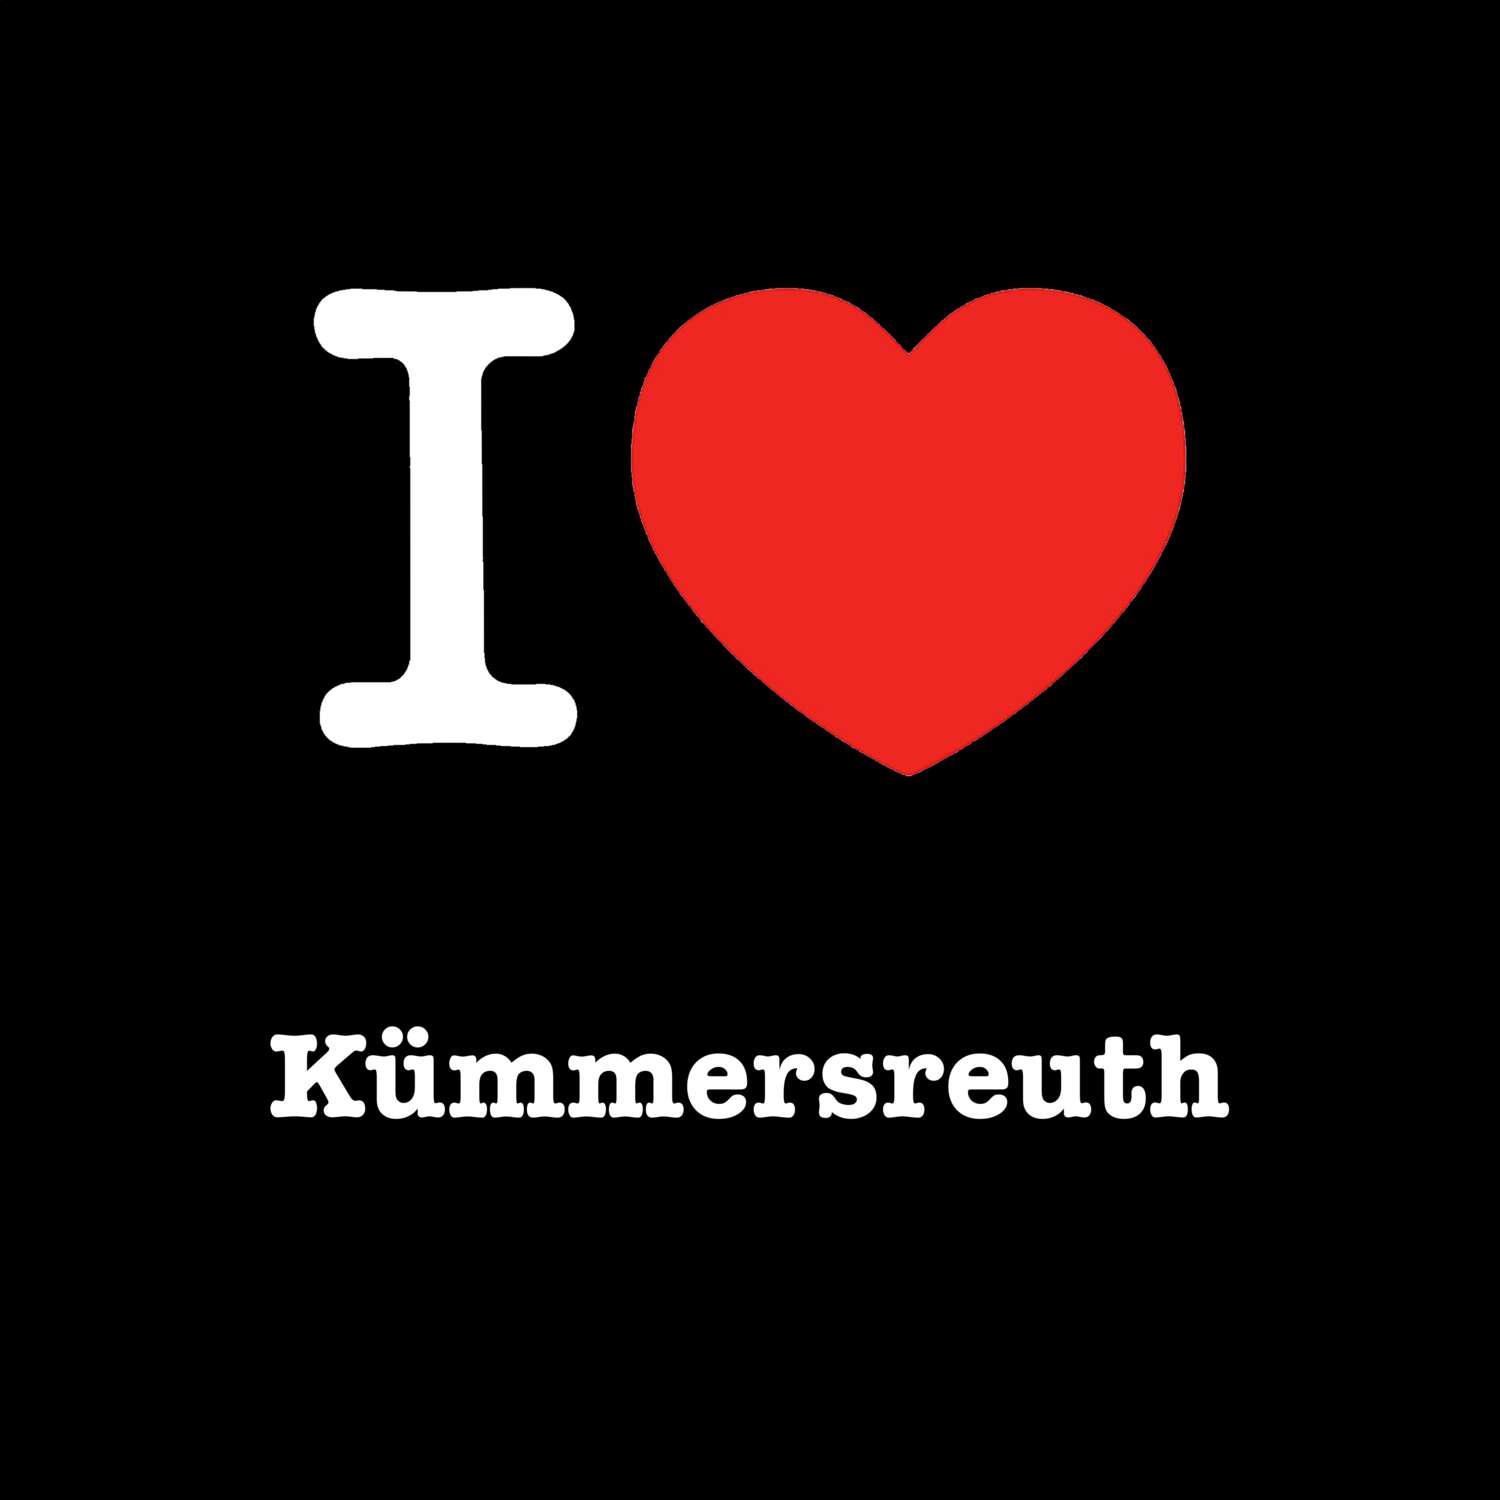 Kümmersreuth T-Shirt »I love«